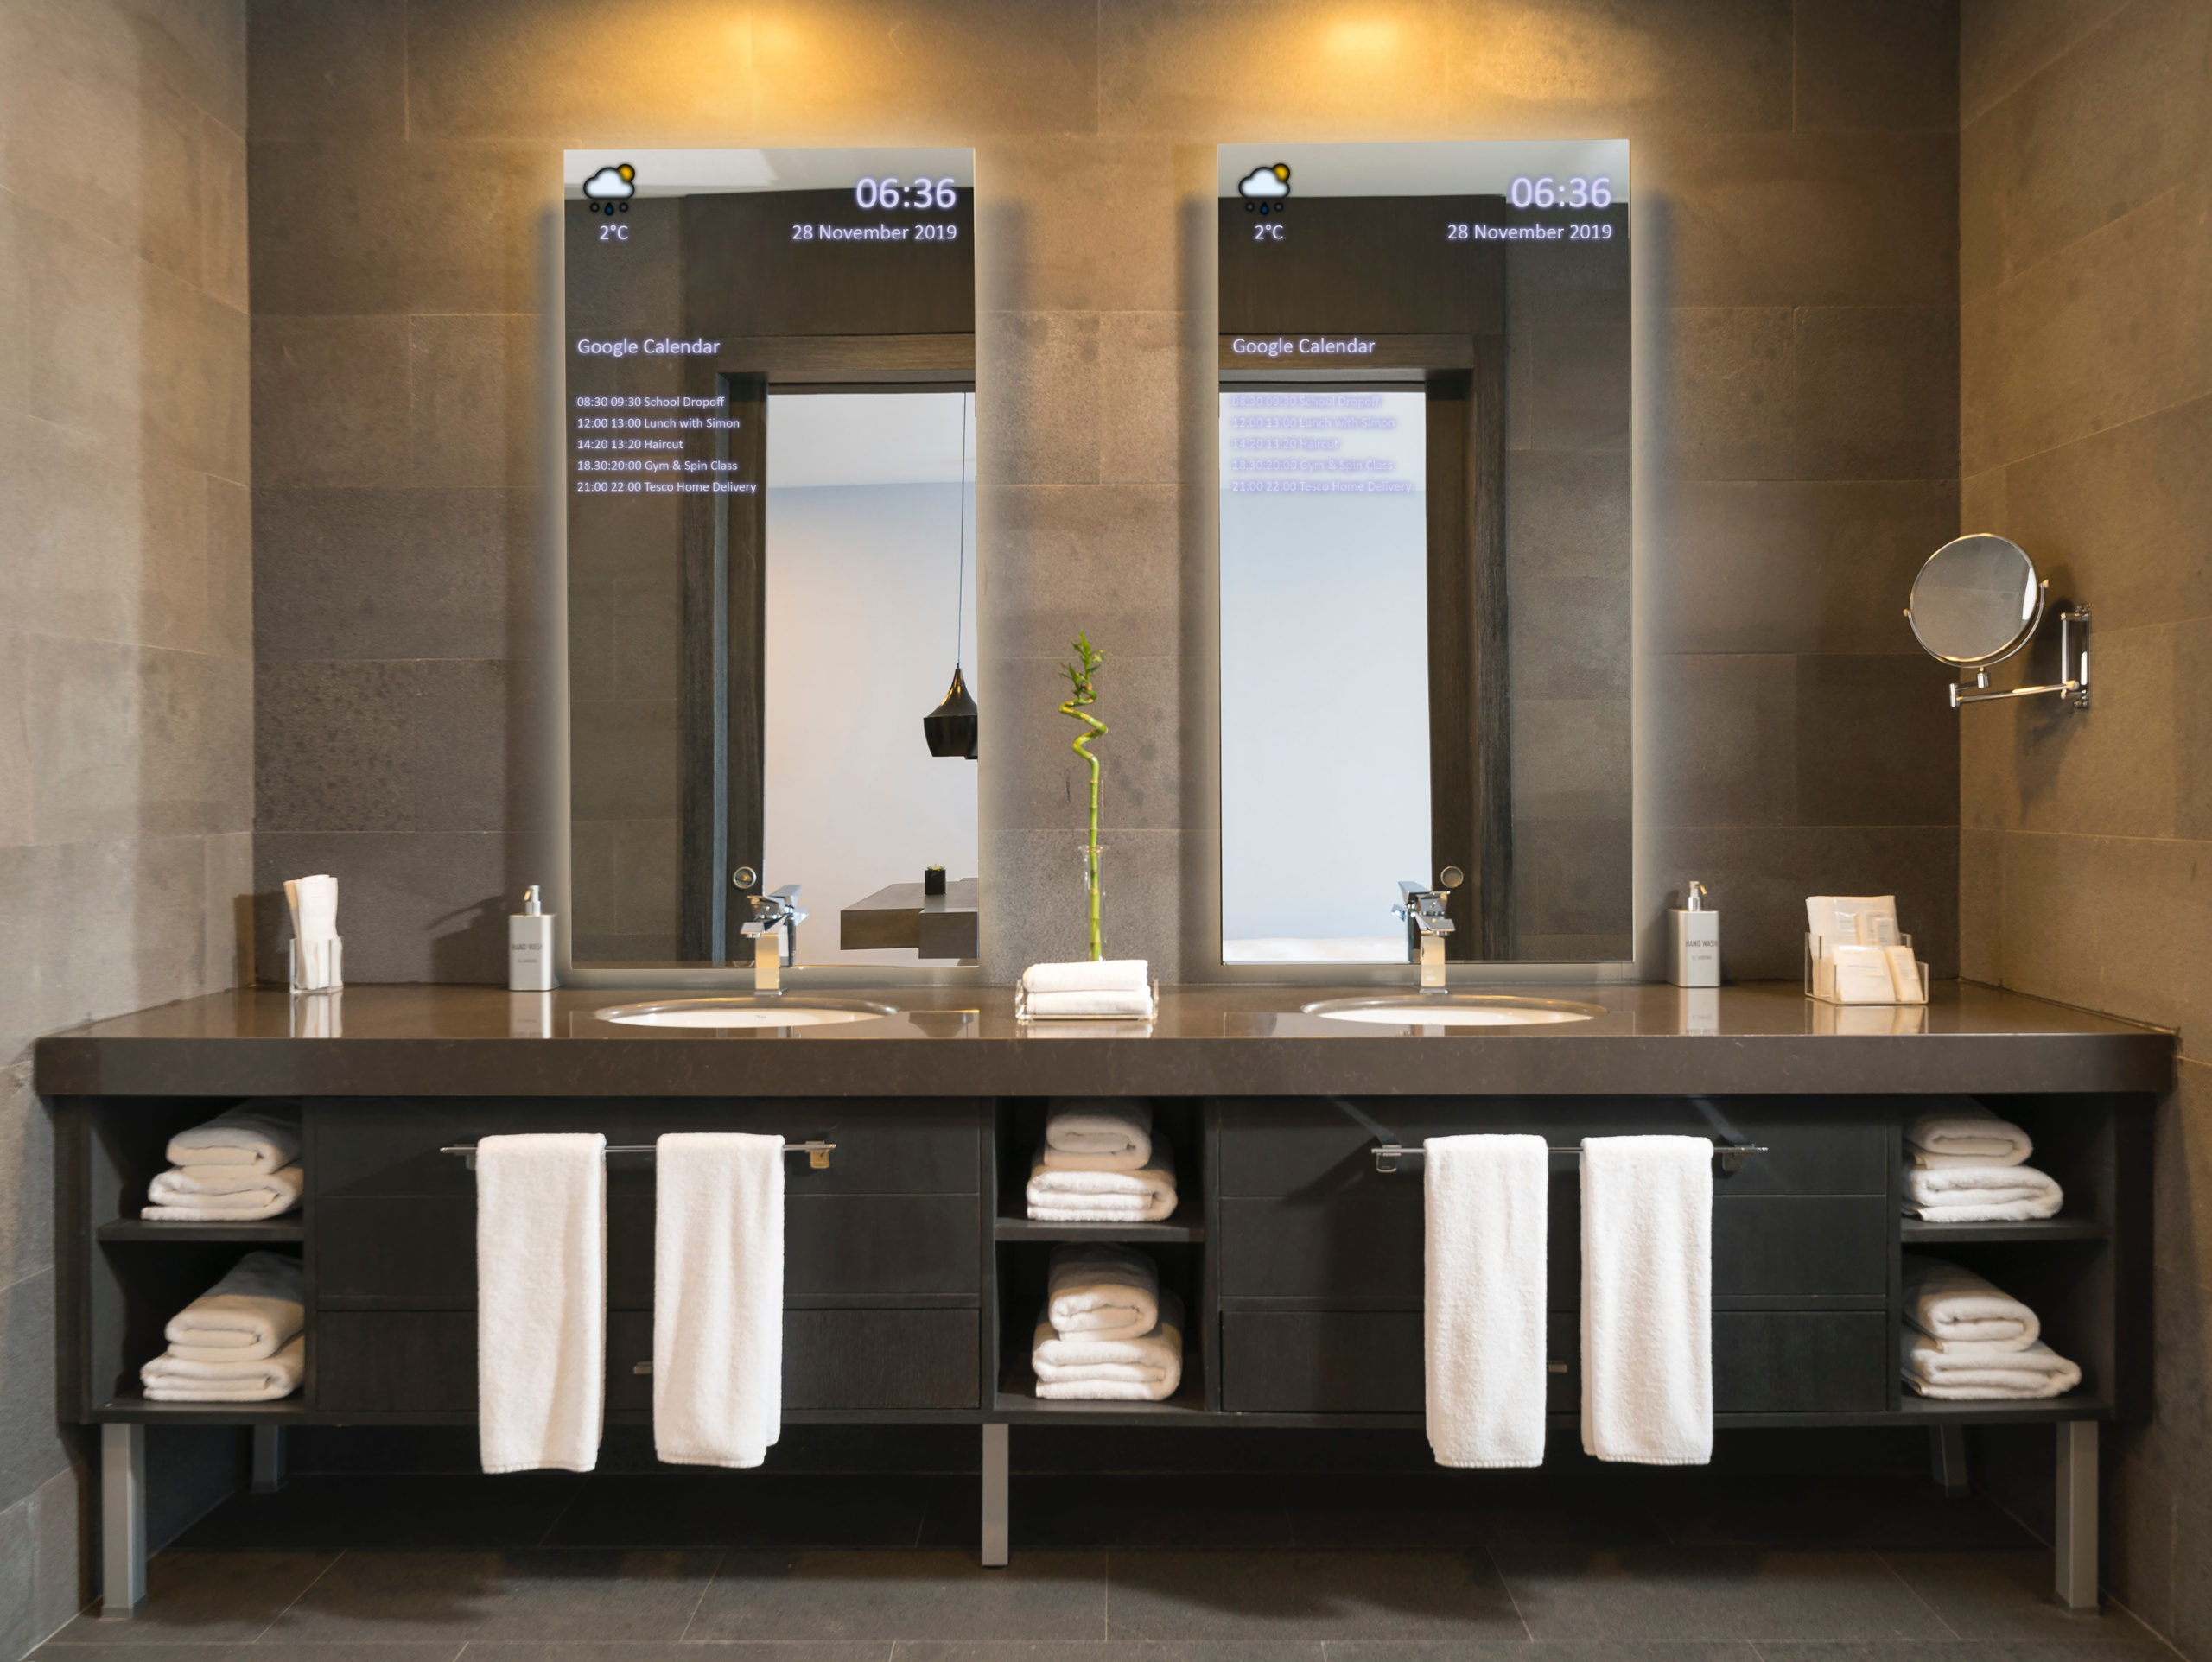 Home Bathroom Interior Design by MDfx voice controlled mirror with alexa capabilites smart mirror connected